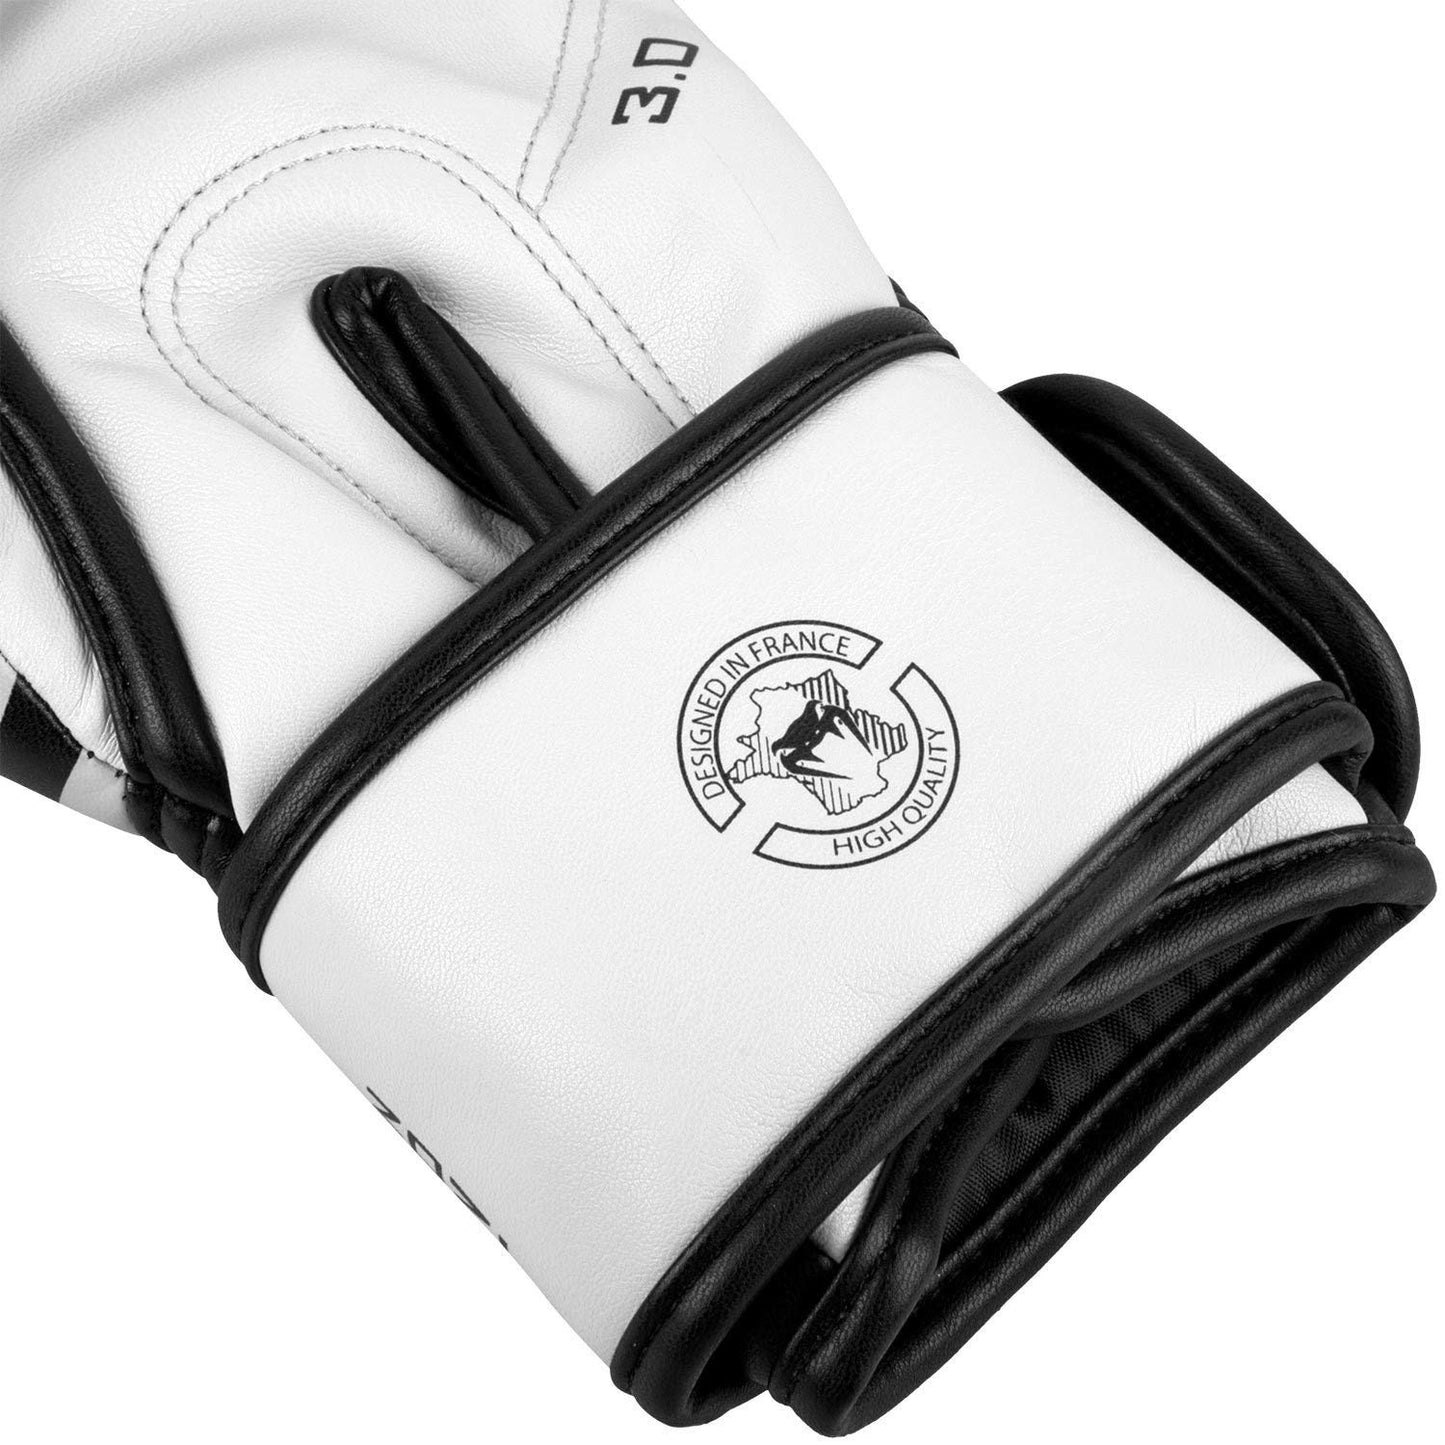 Venum Challenger 3.0 Boxing Gloves - Best Price online Prokicksports.com